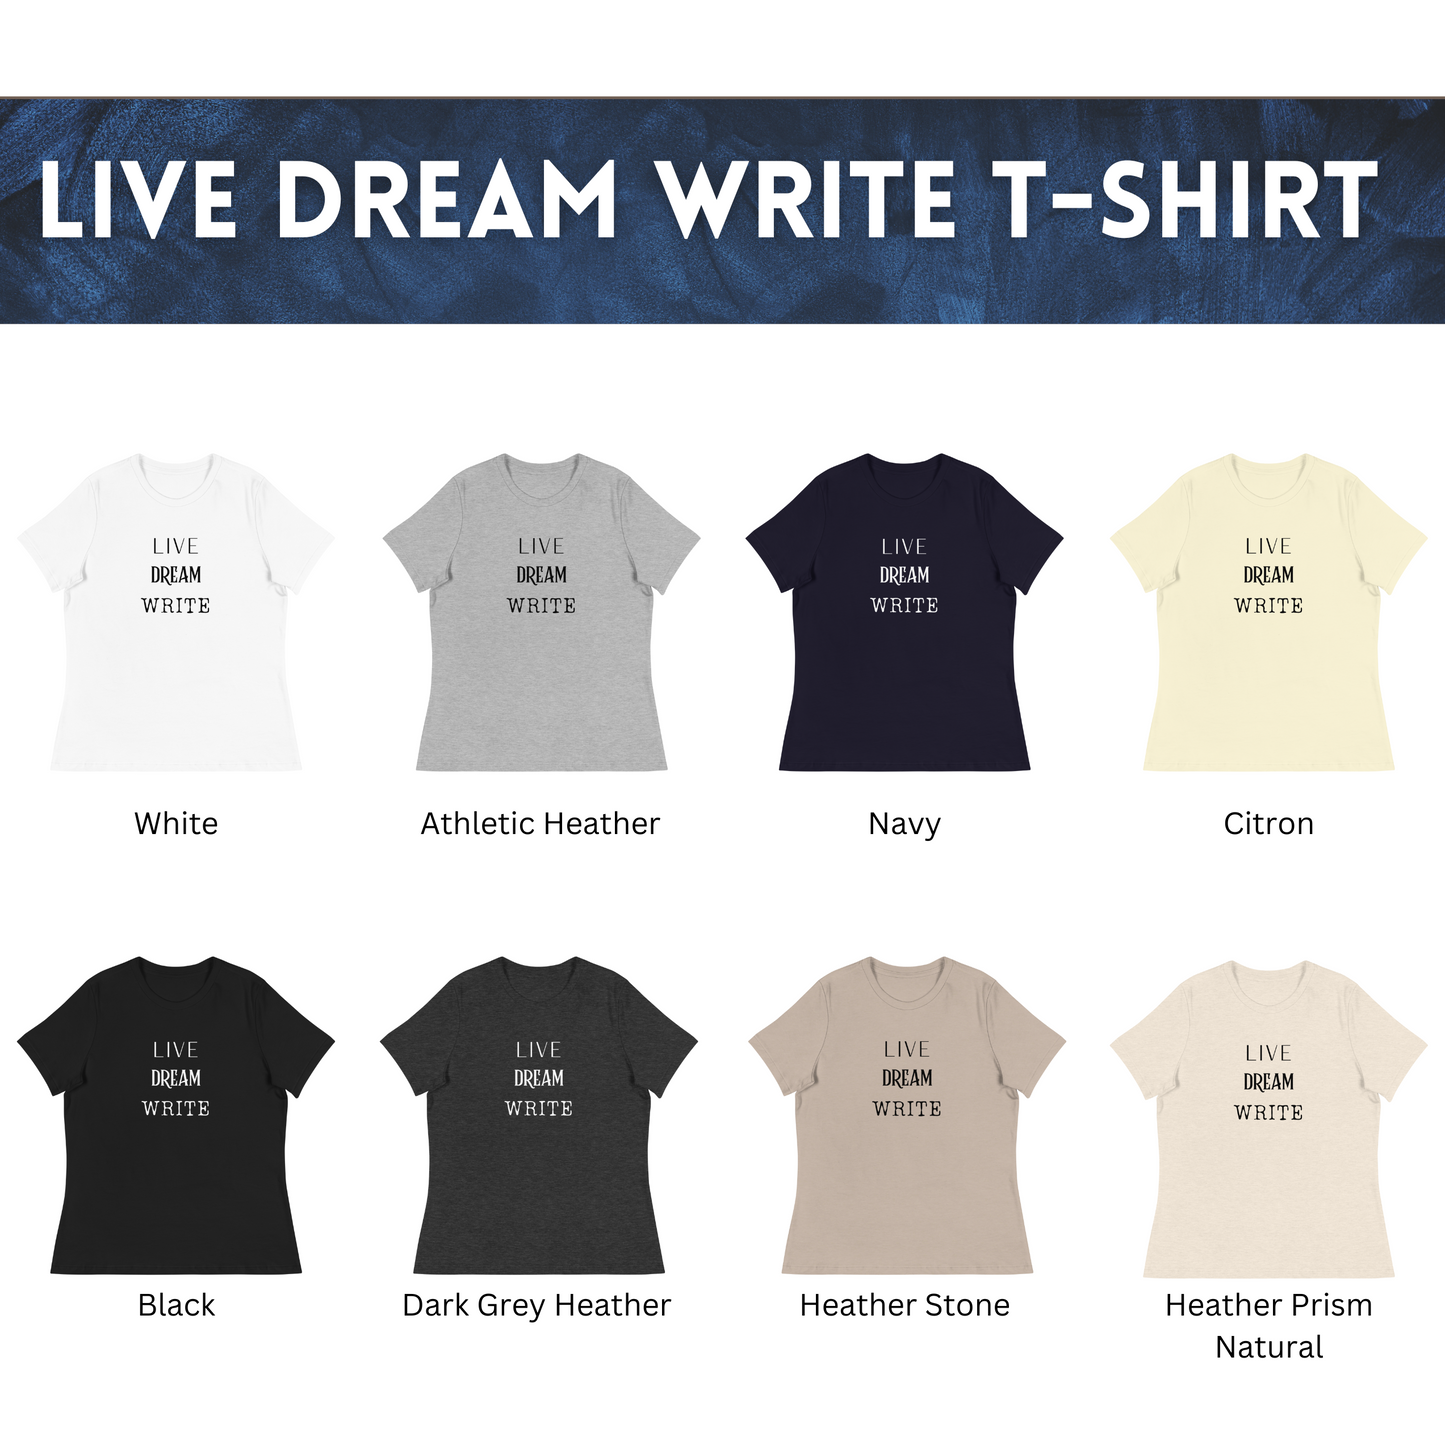 Live Dream Write | Women's Relaxed T-Shirt